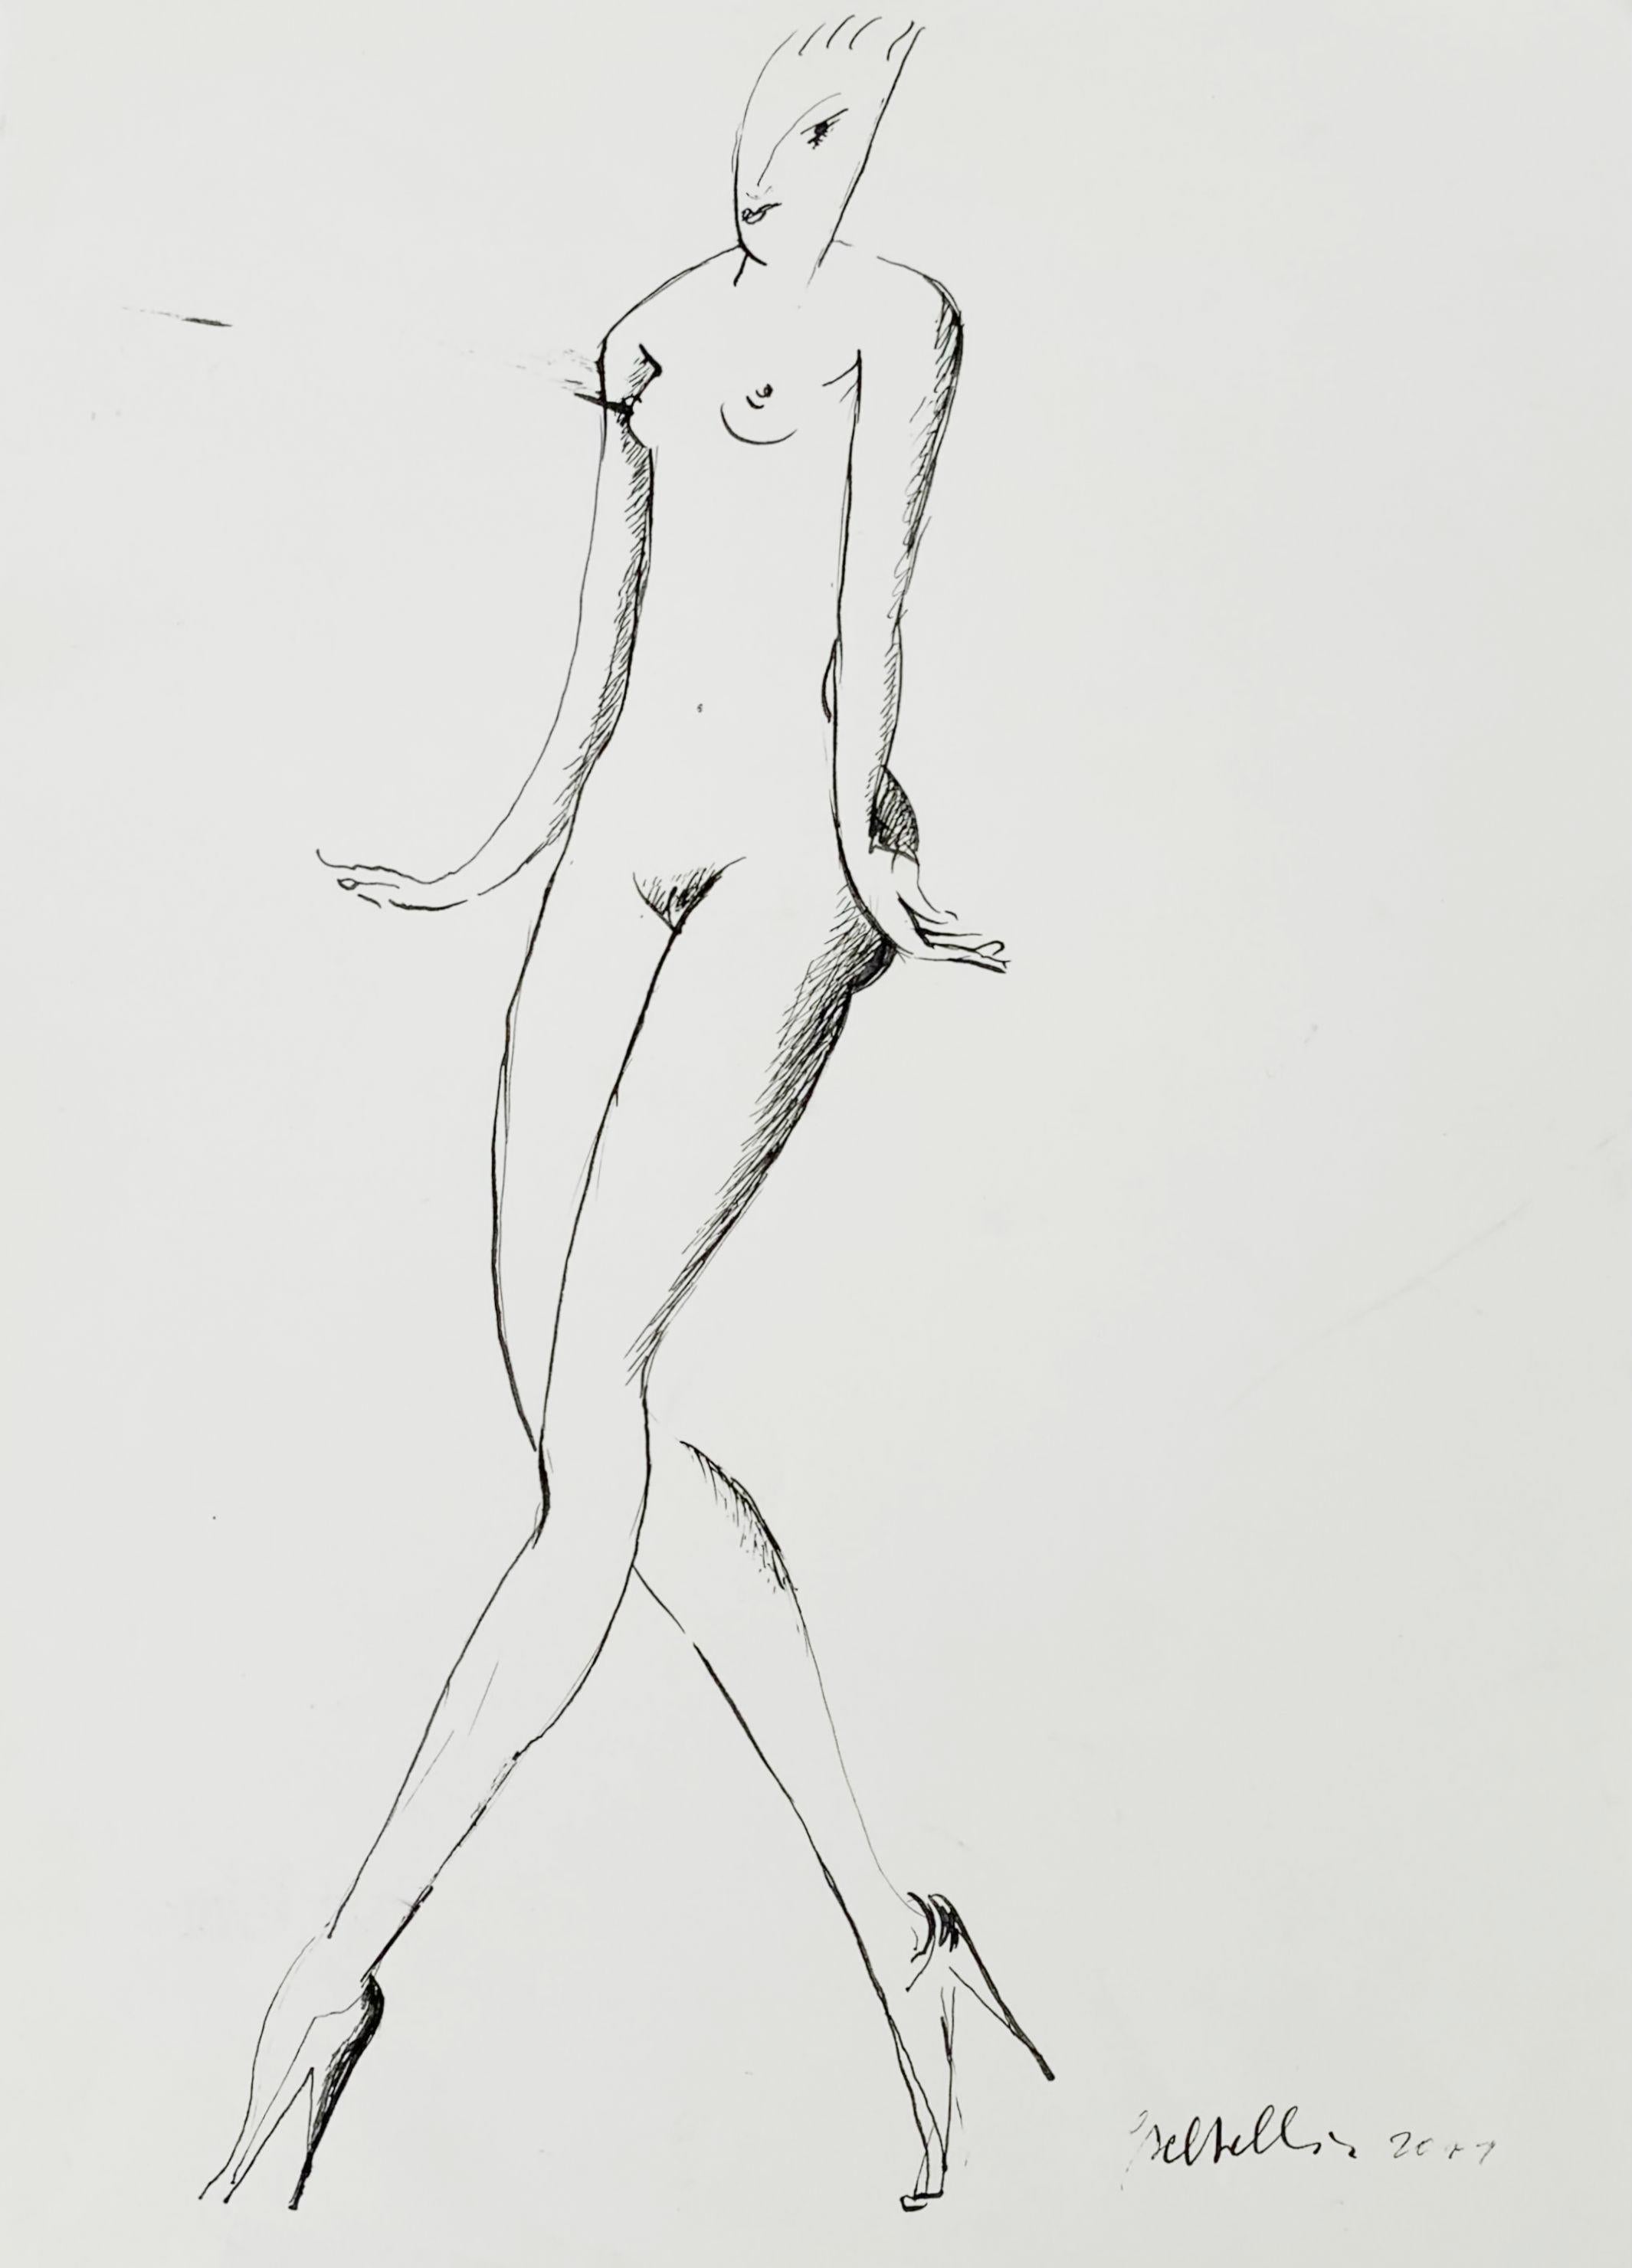 Giuseppe del Debbio Figurative Art - Nude - XXI century, Figurative ink drawing, Nude, Black and white, Minimalist